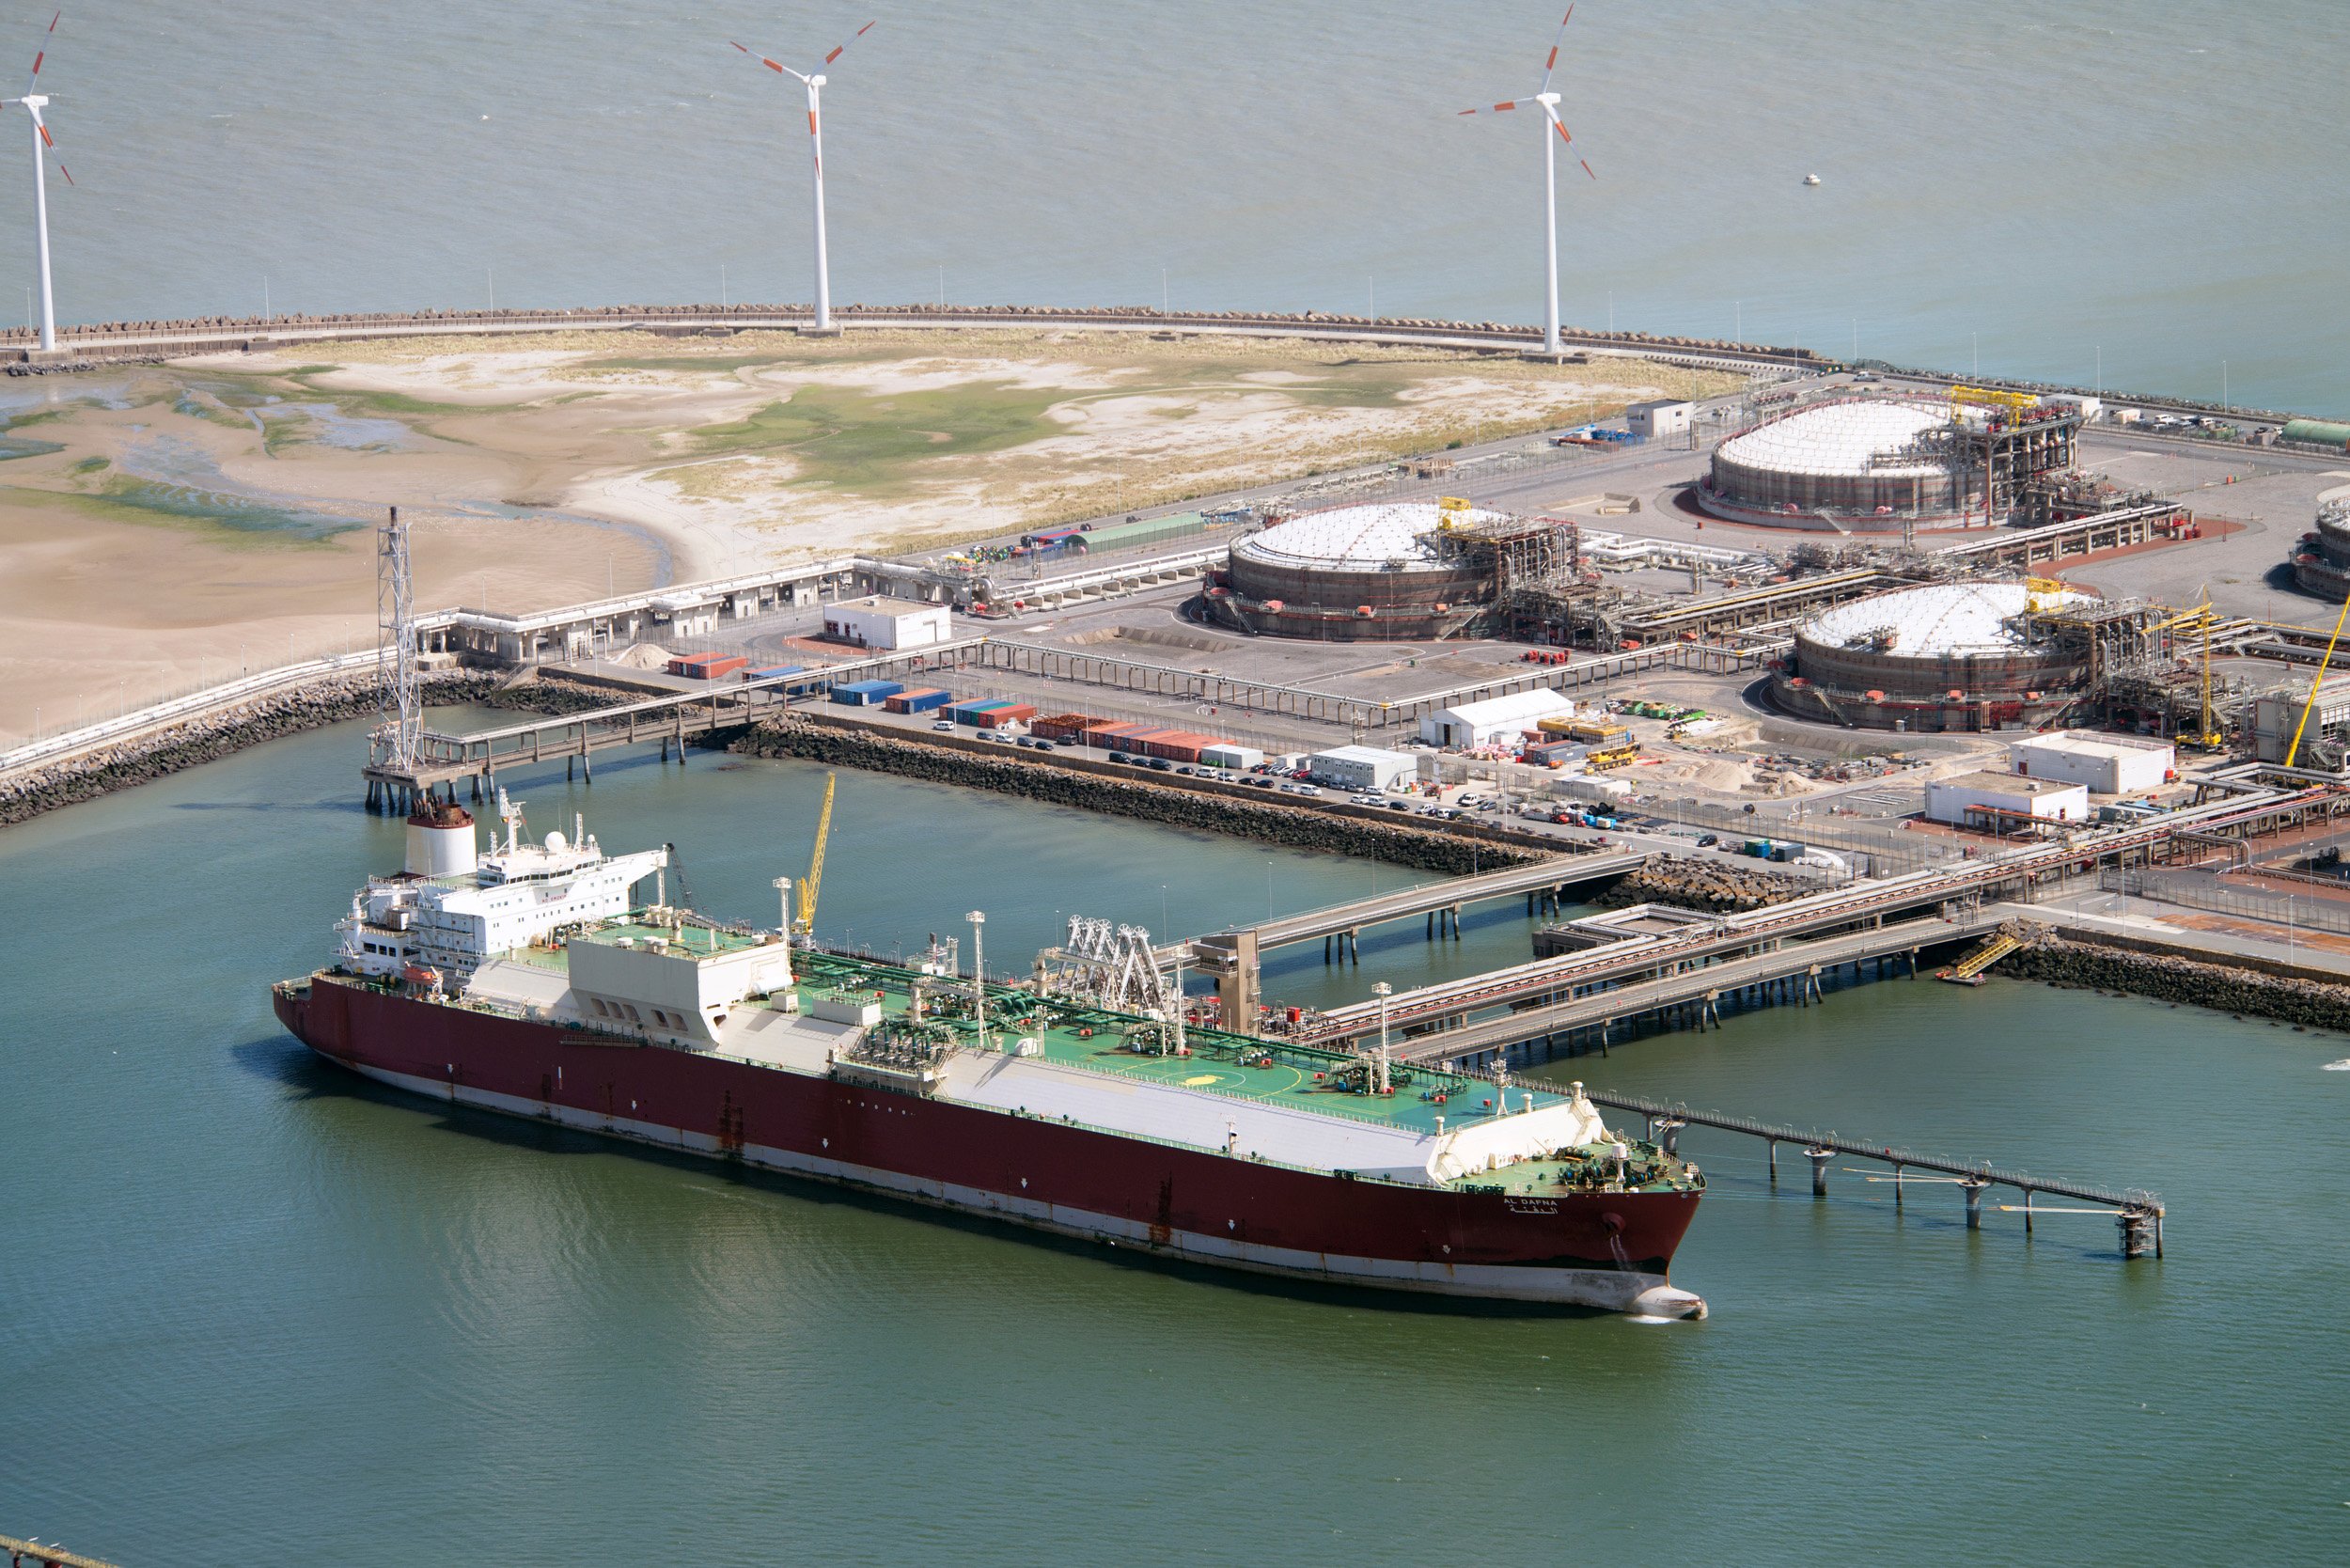 Qatar Petroleum LNG vessel